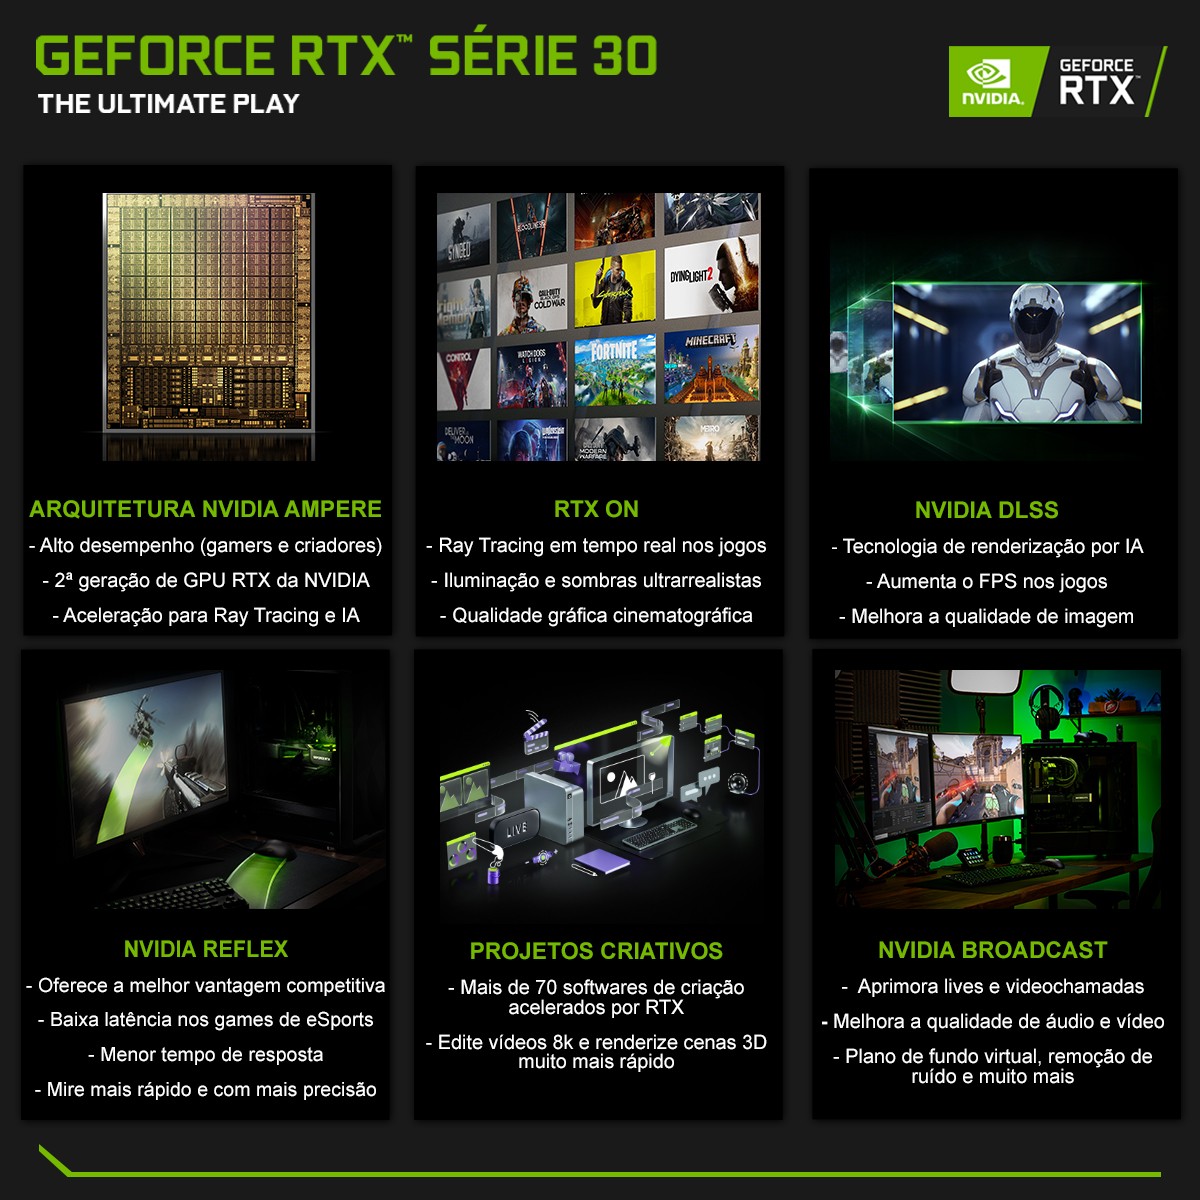 Placa de Vídeo Galax NVIDIA GeForce RTX 3050 EX (1-Click OC), LHR, 8GB, GDDR6, DLSS, Ray Tracing, 35NSL8MD6YEX